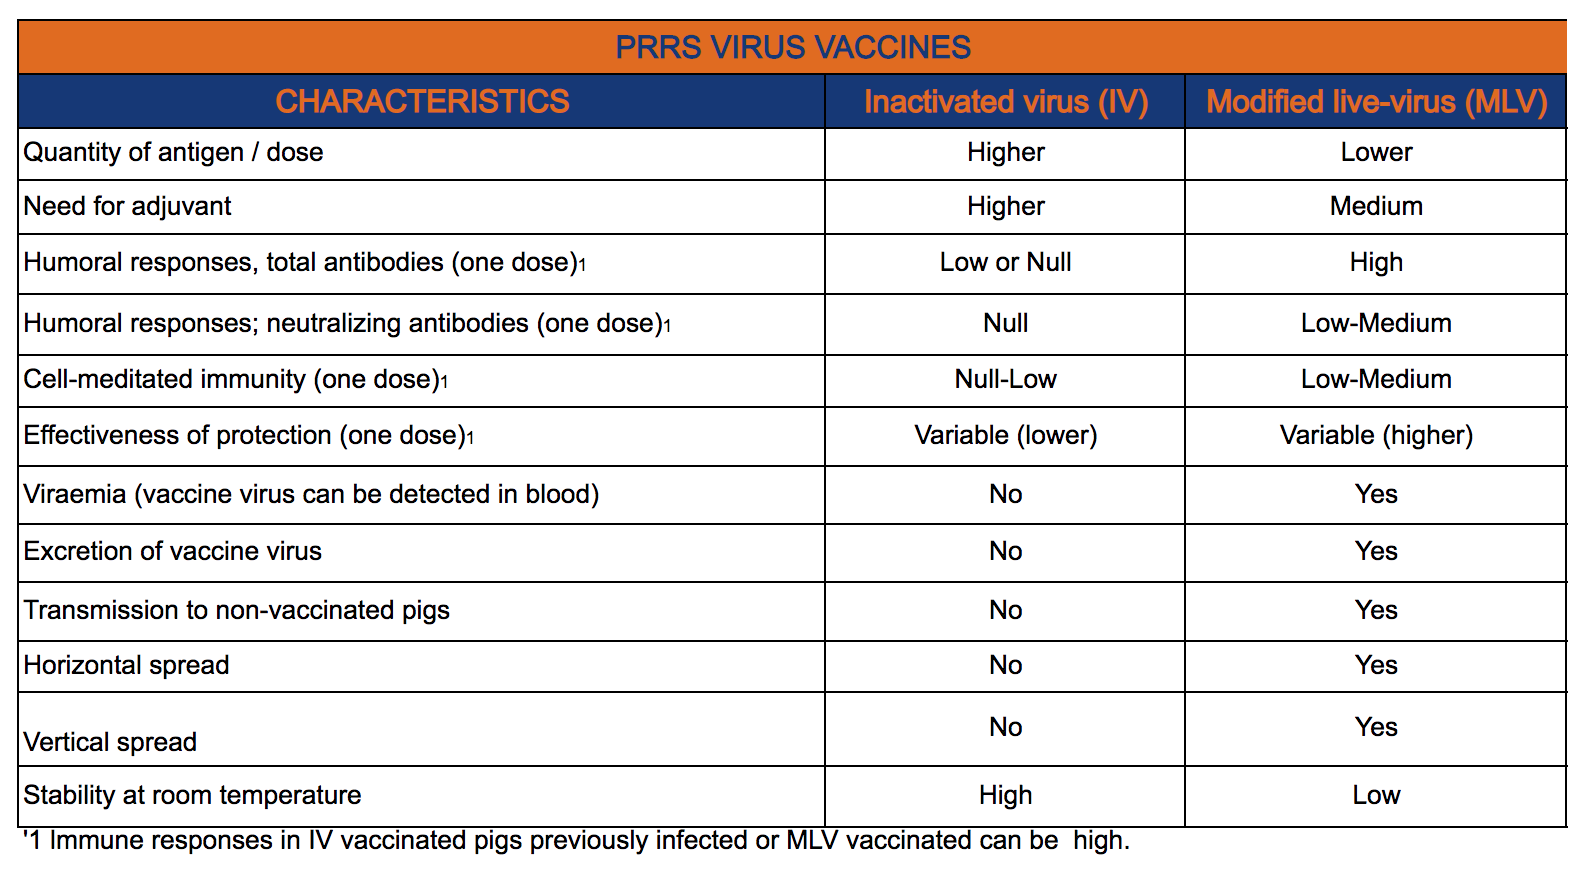 PRRS virus vaccines